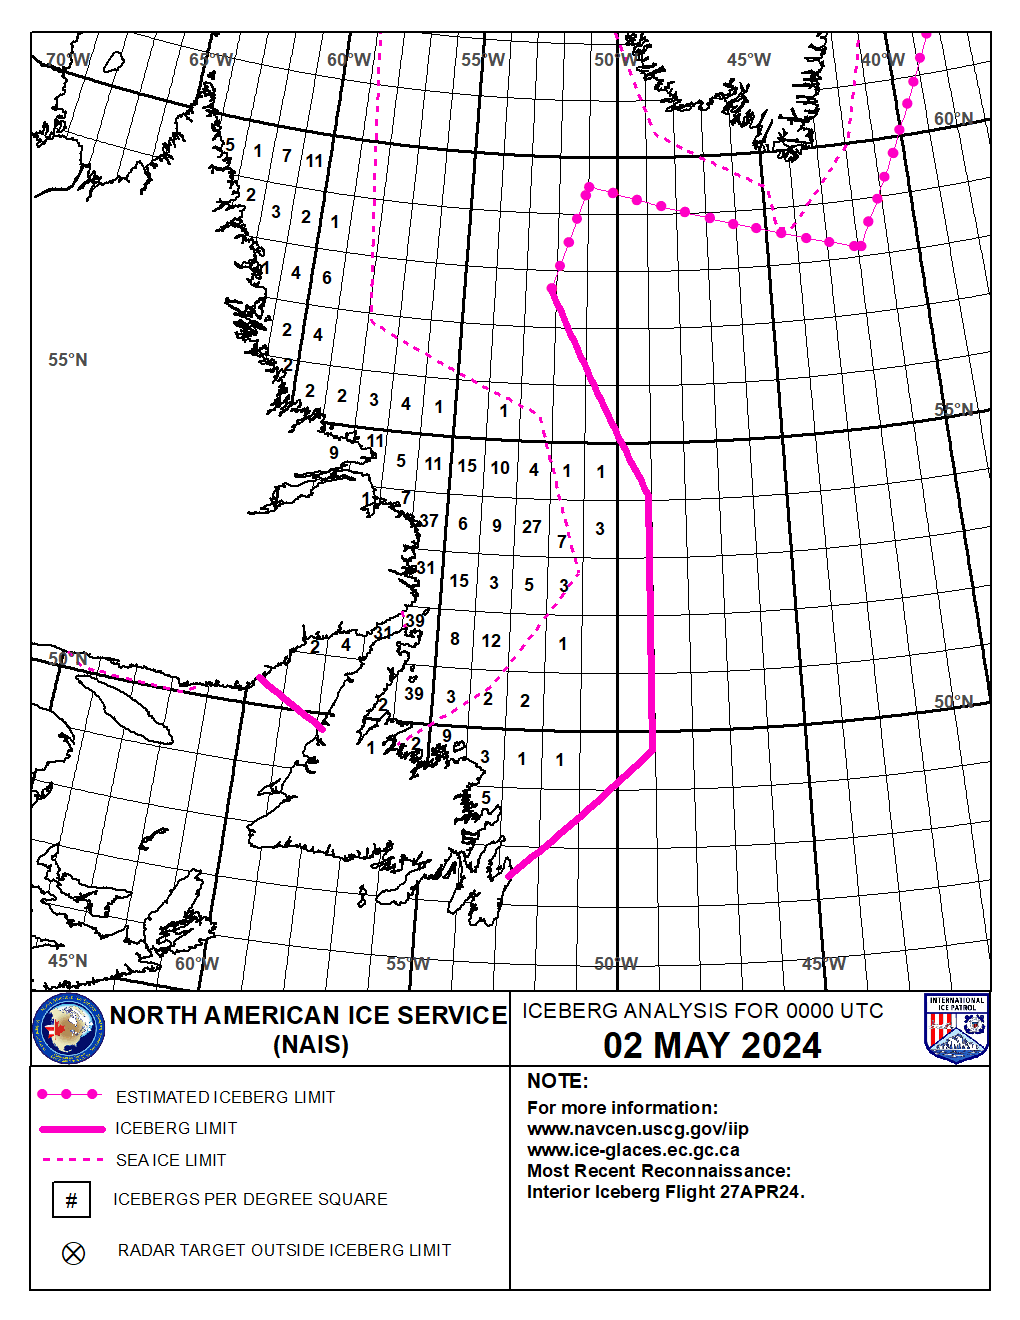 Map of Iceberg Analysis for North-Atlantic sea